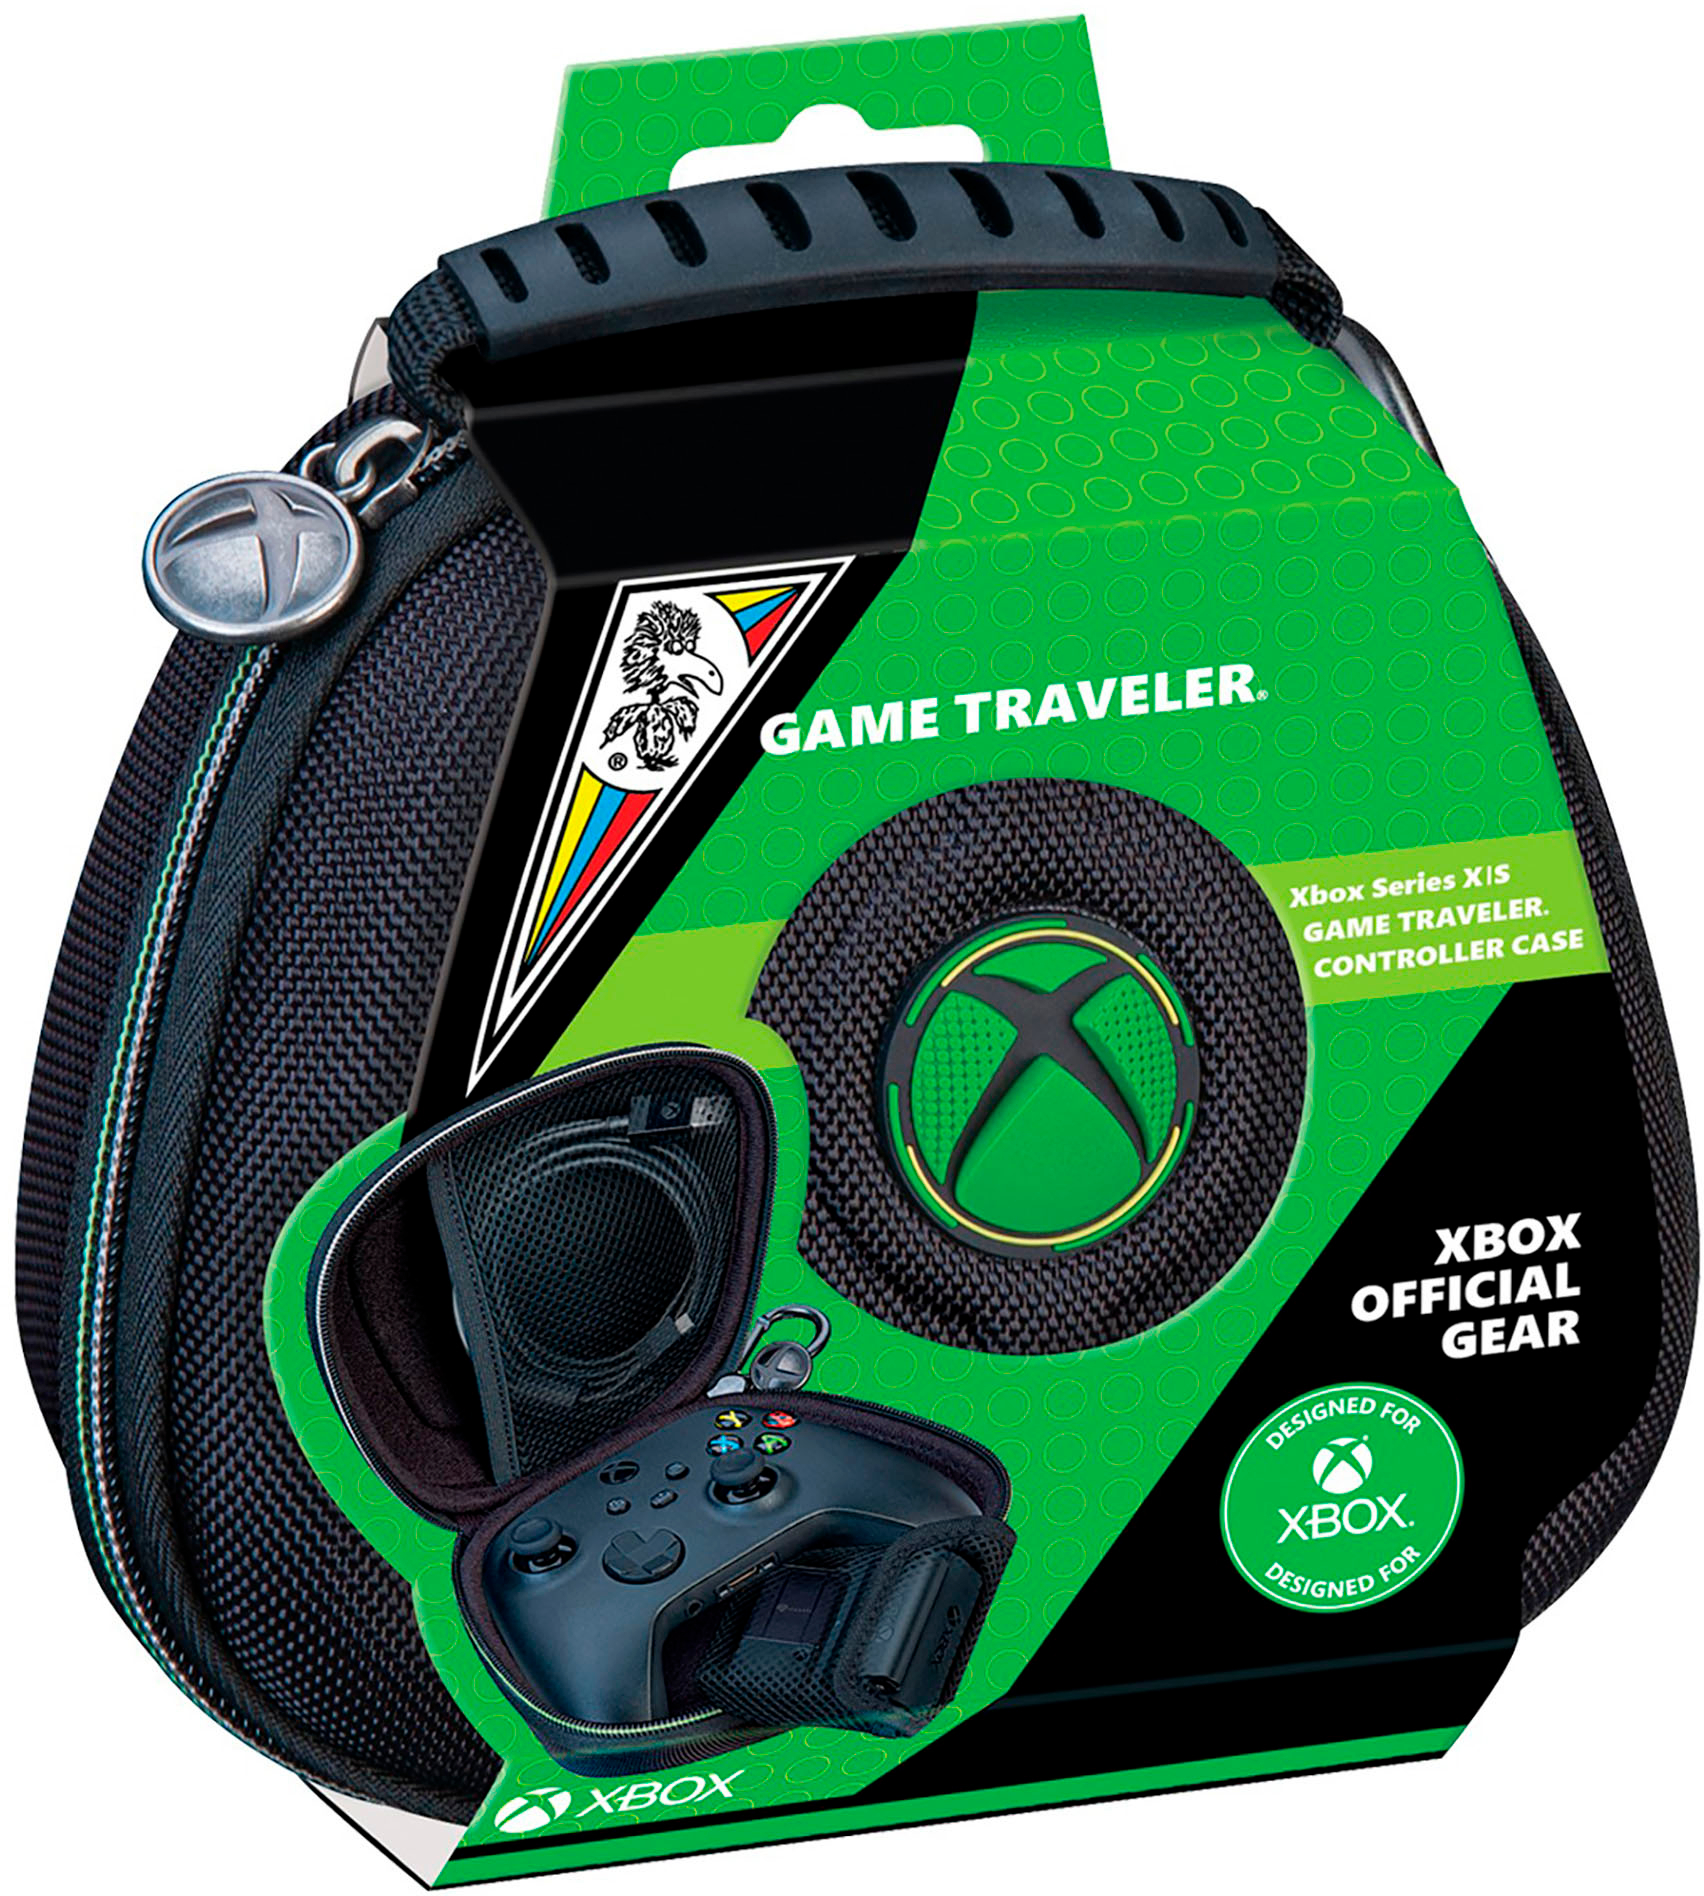 RDS Industries - Gamer Traveler Controller Case Xbox Series X|S